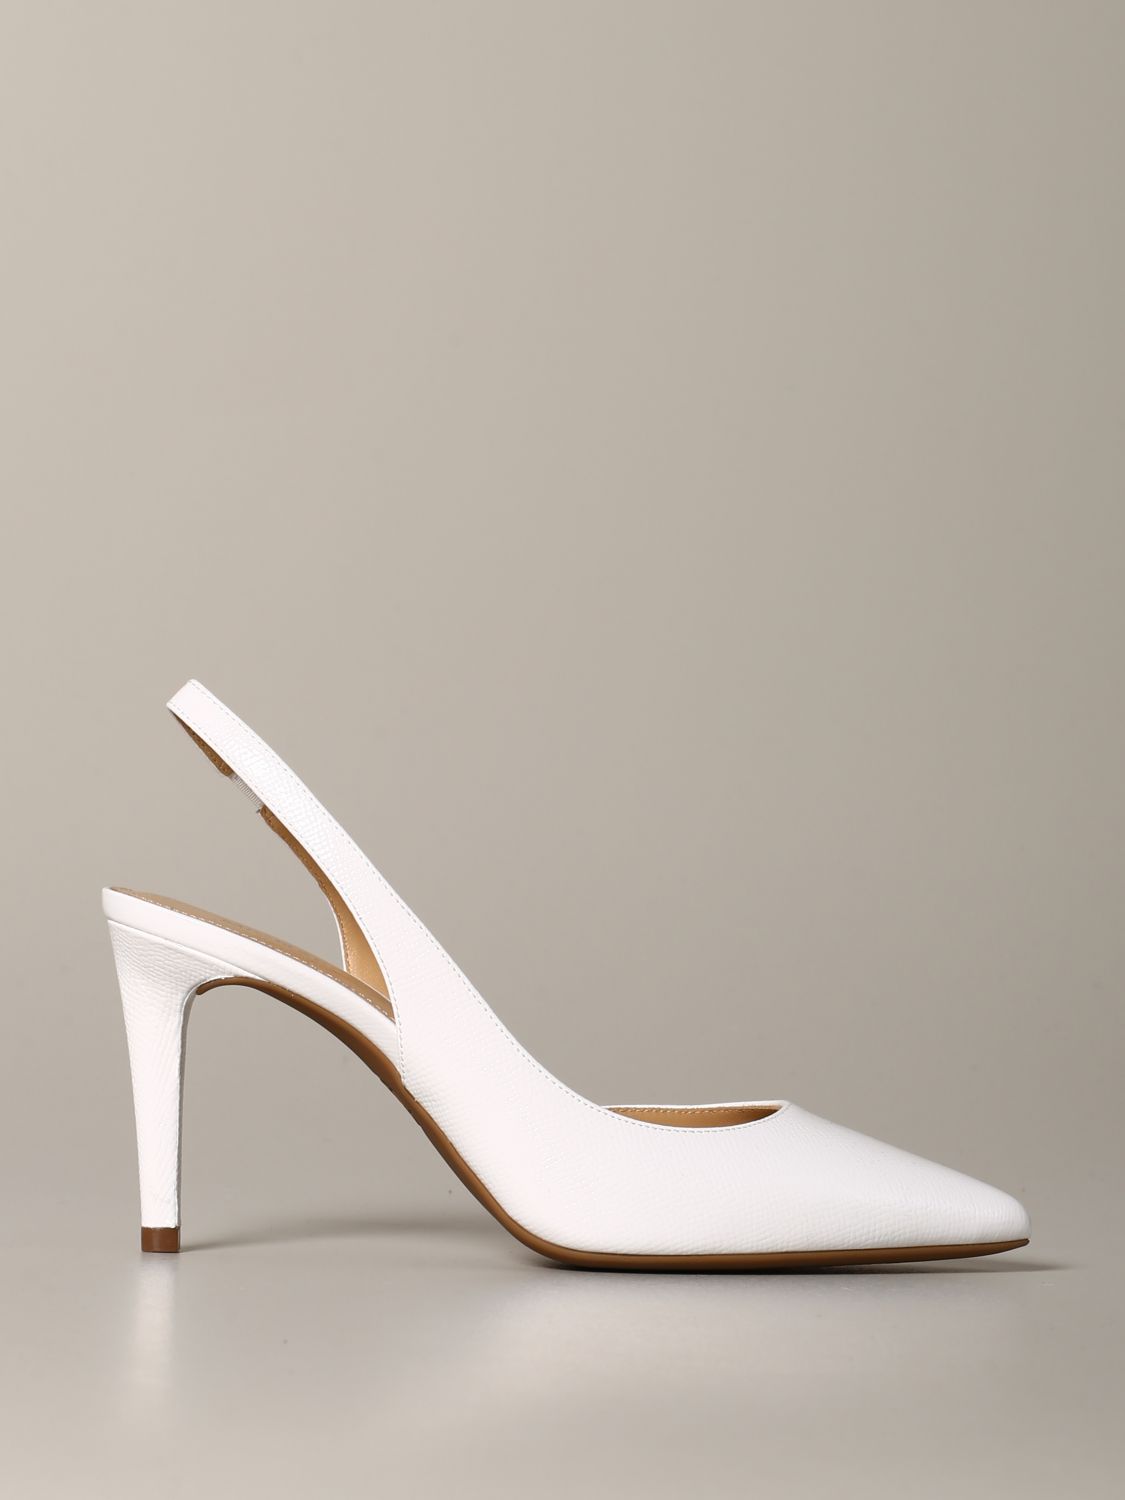 white pump shoes womens